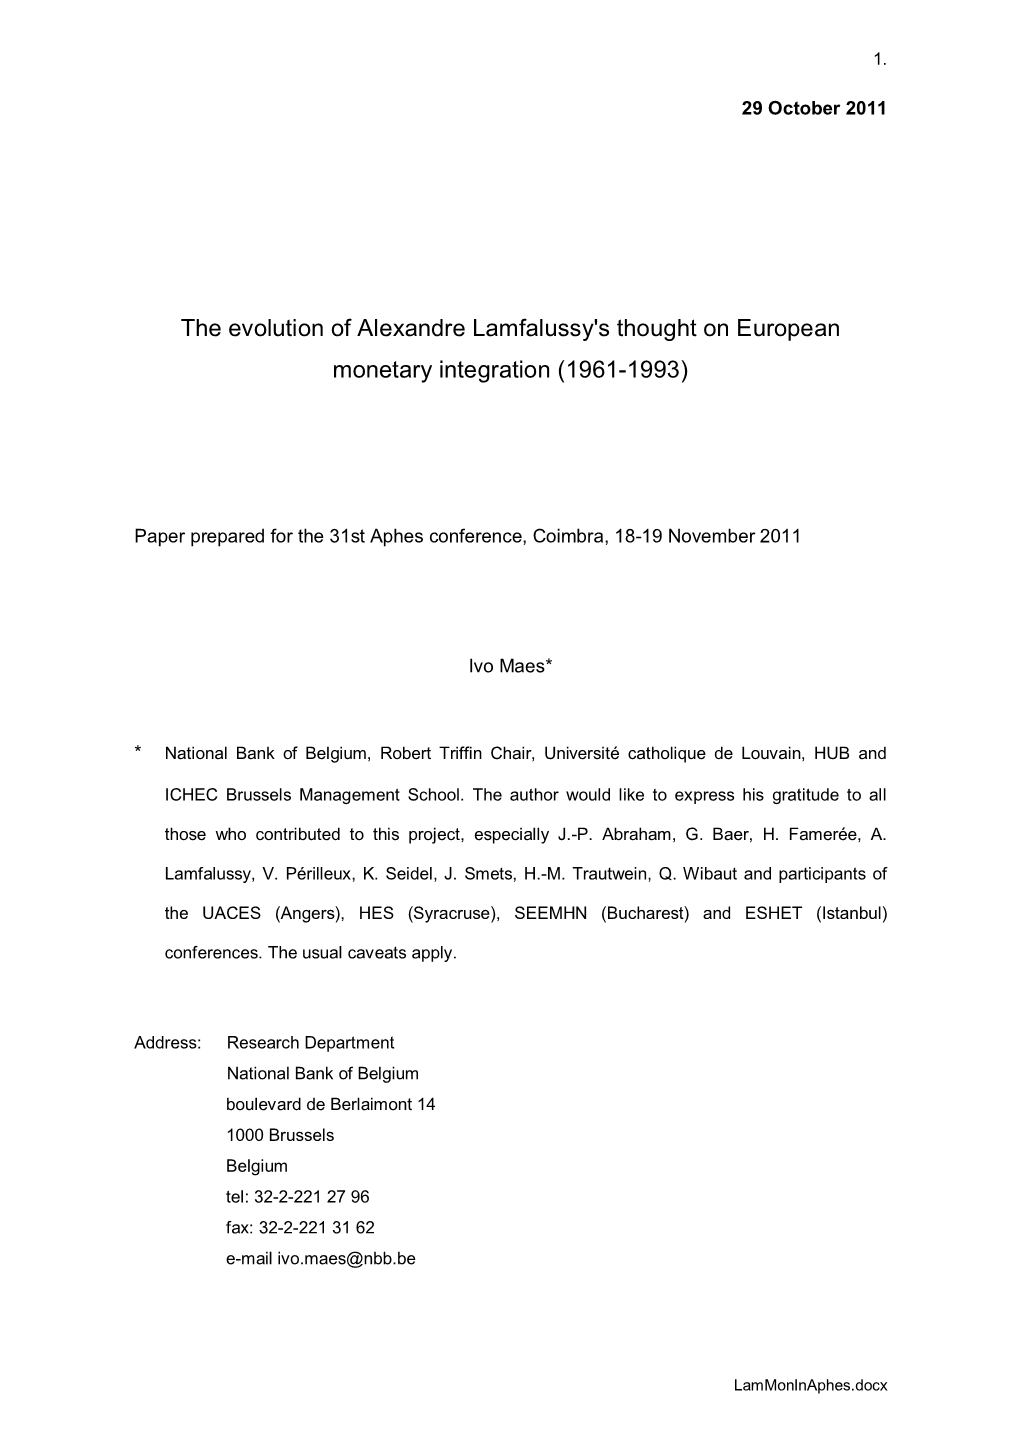 On the Origins of Alexandre Lamfalussy's Thought on European